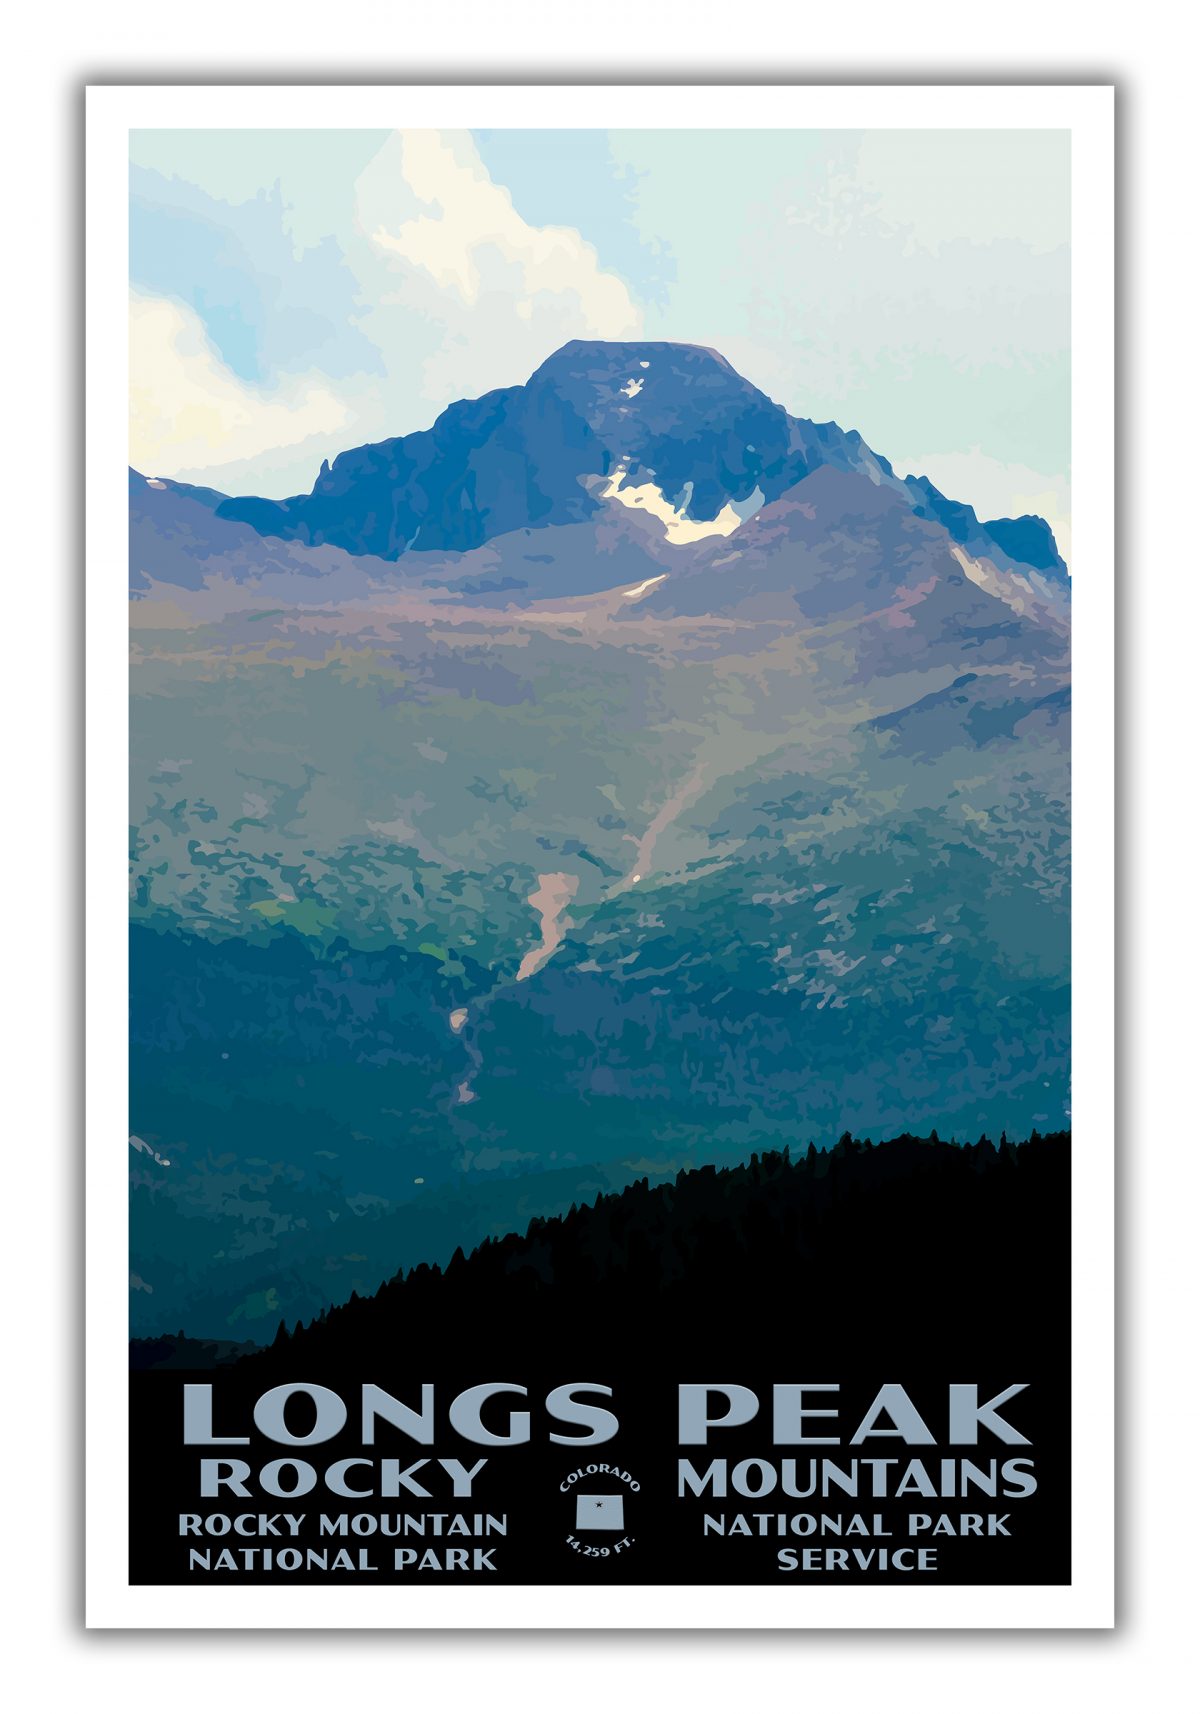 Longs Peak Poster